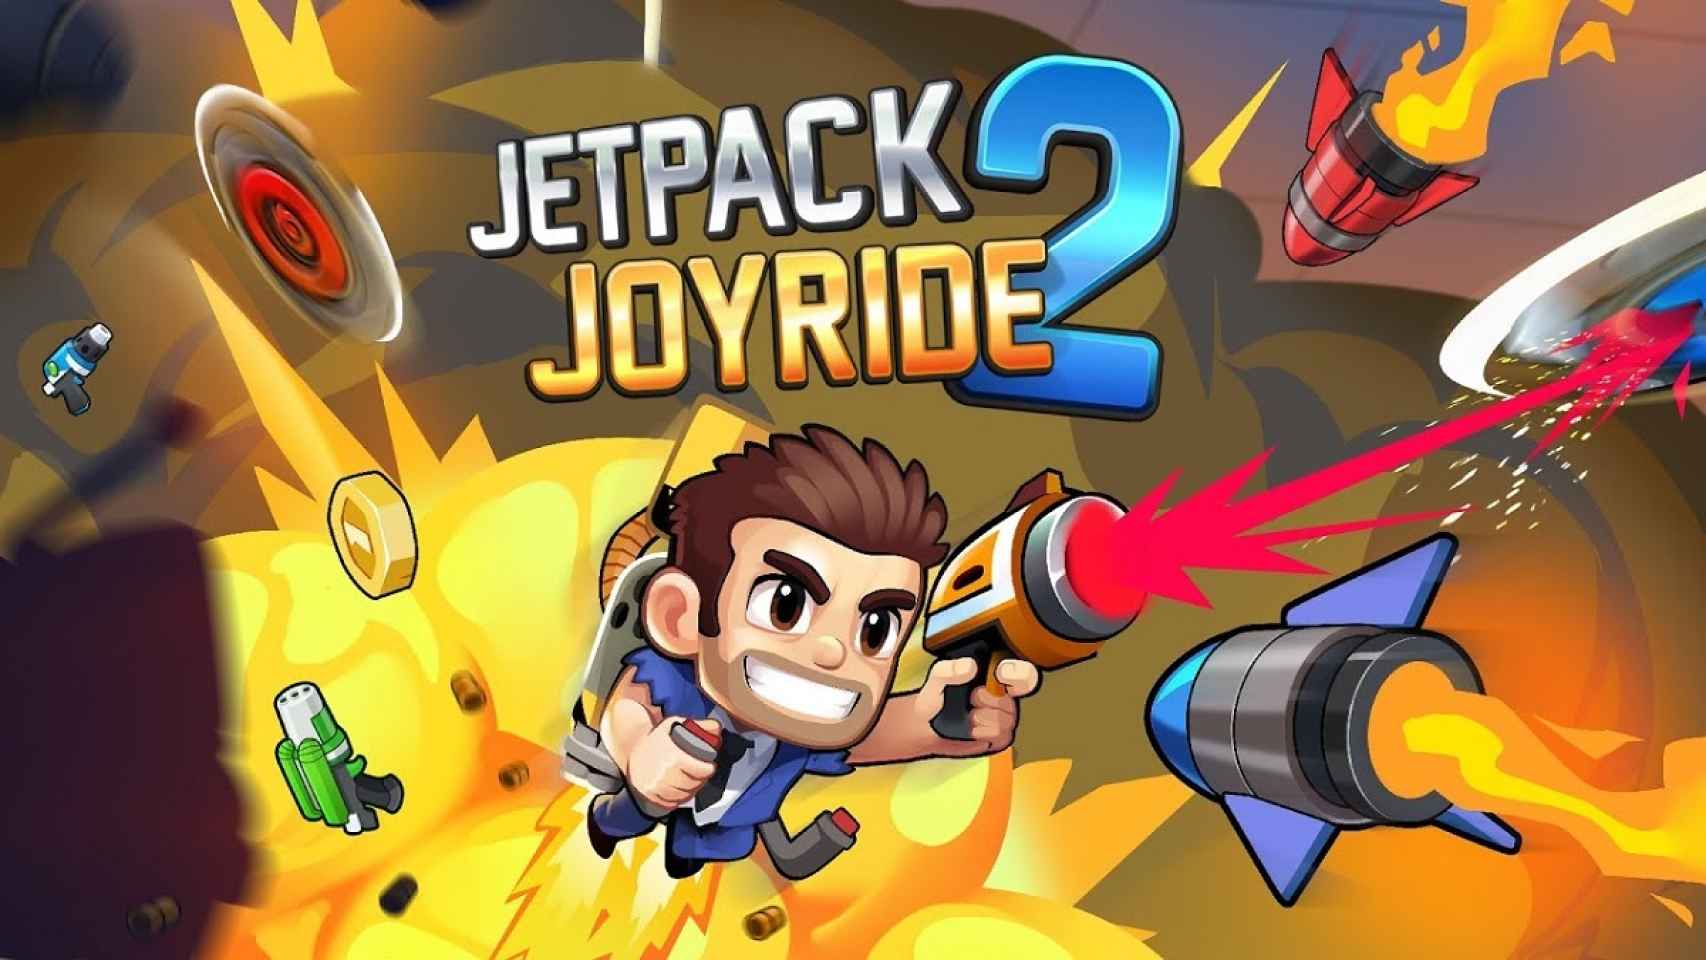 Jetpack Joyride 2 llega a Android 10 años después del original